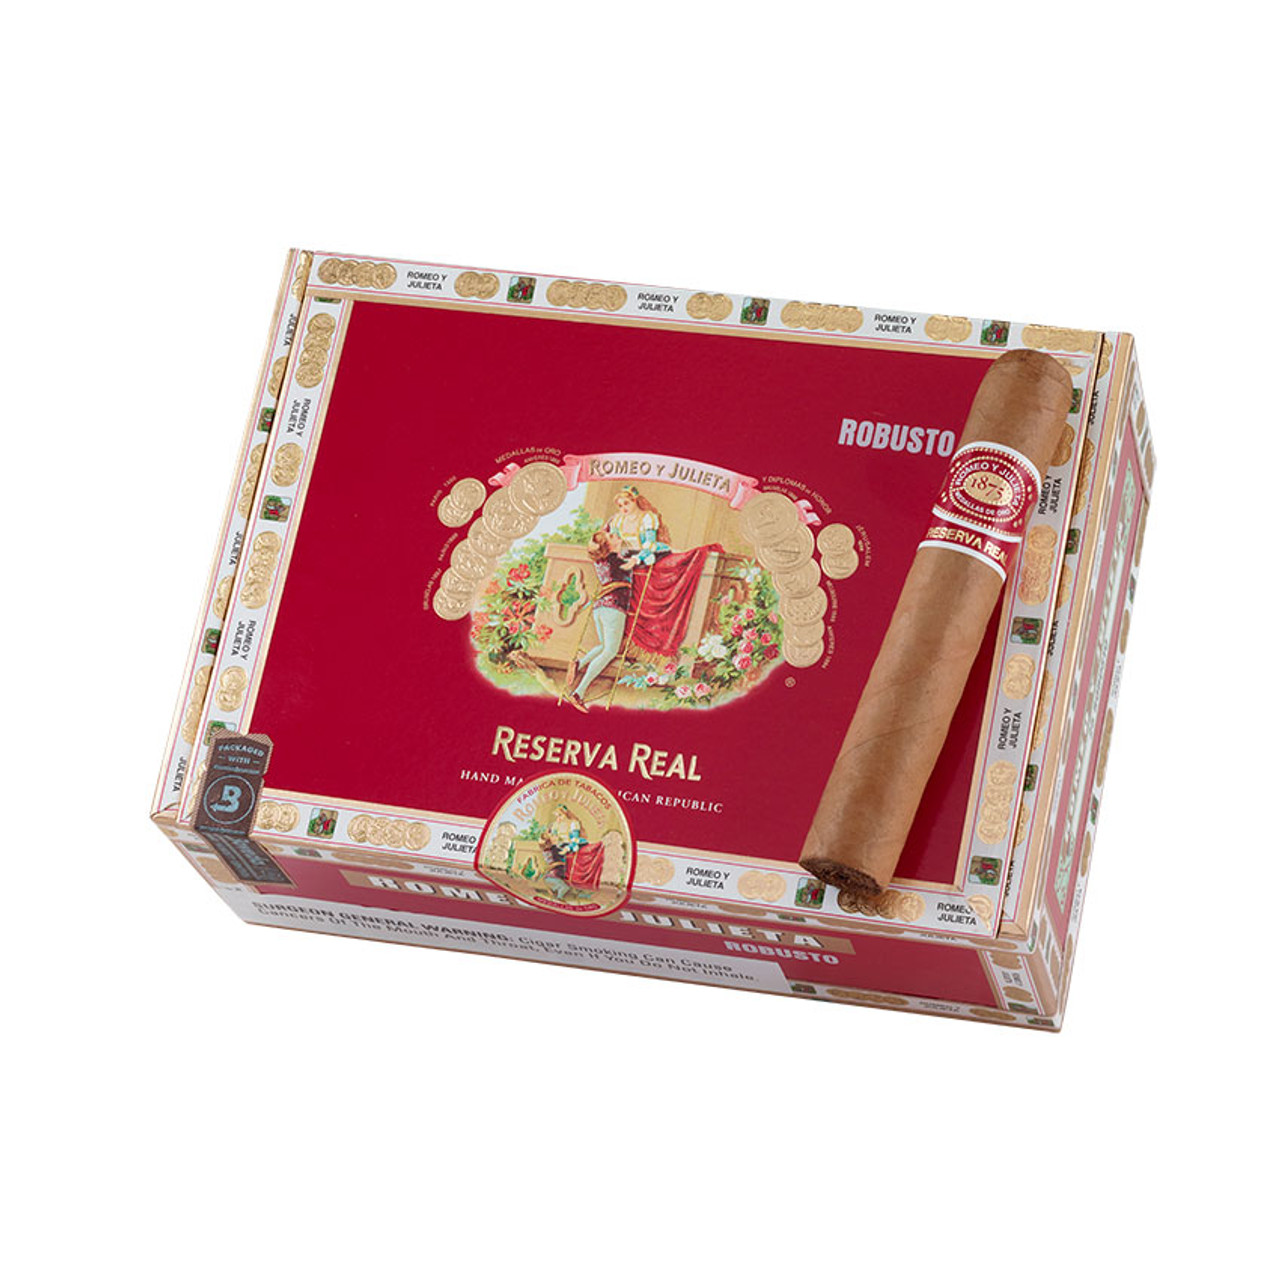 Romeo y Julieta Reserva Real Robusto Cigars - 5 x 52 (Box of 10) *Box